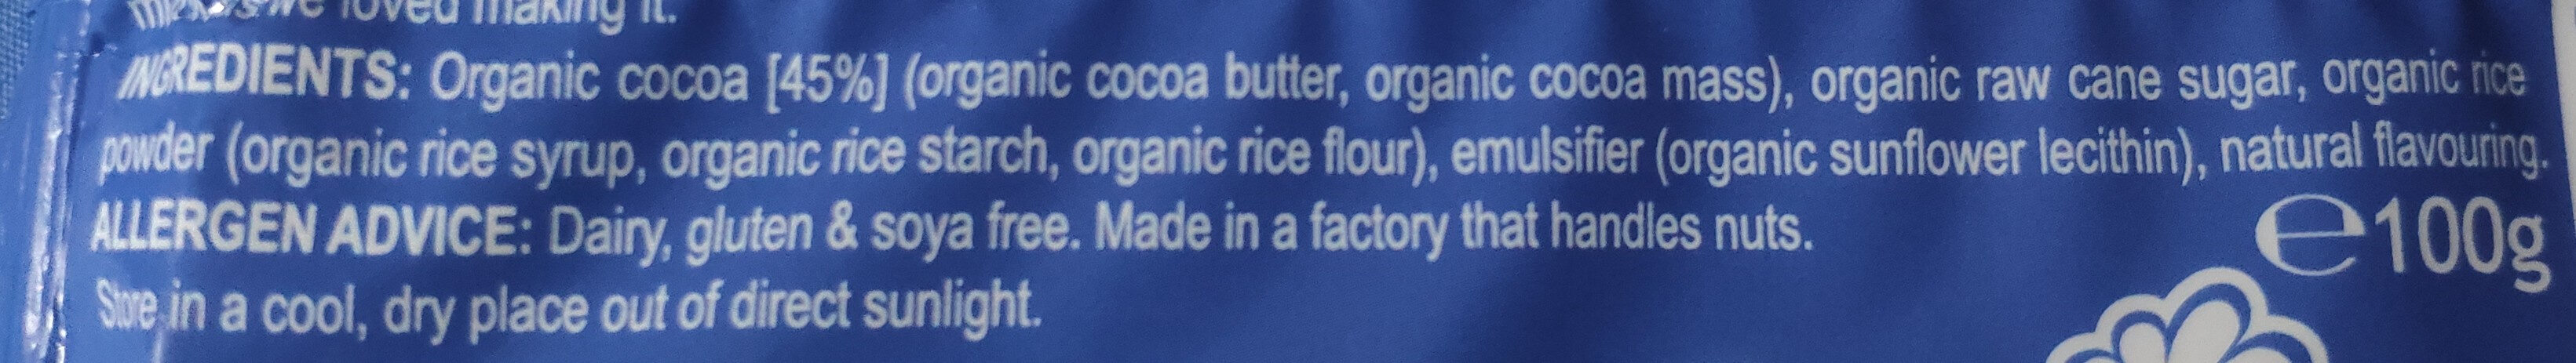 Free Organic Milk Chocolate Alternative Original - Ingredients - en